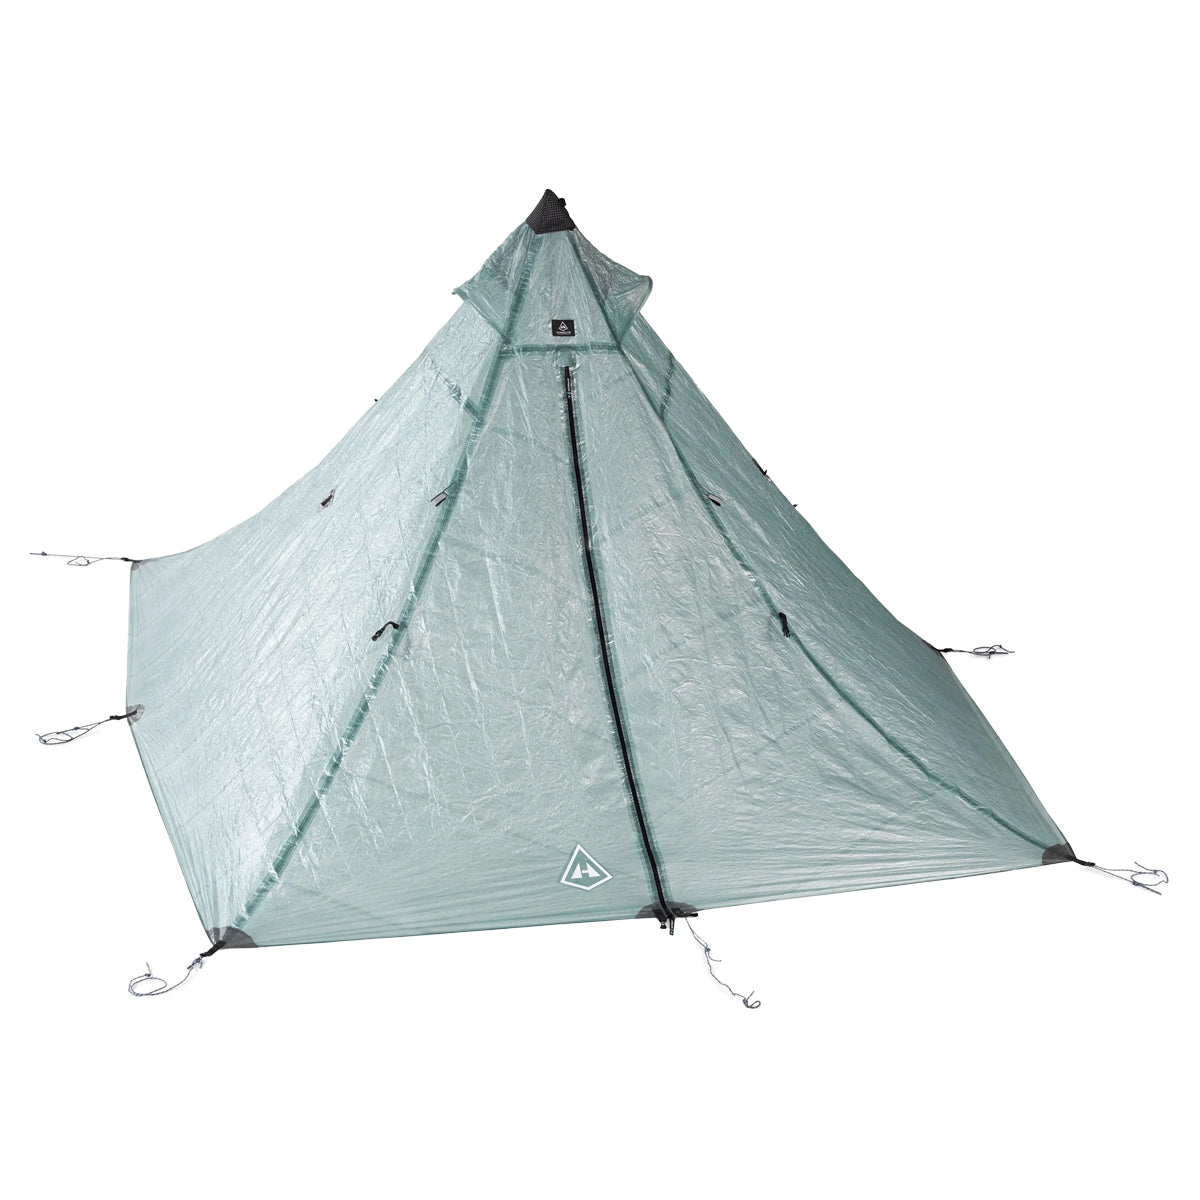 Hyperlite Mountain Gear UltaMid 2 - Ultralight Pyramid Tent in Green by GOHUNT | Hyperlite Mountain Gear - GOHUNT Shop